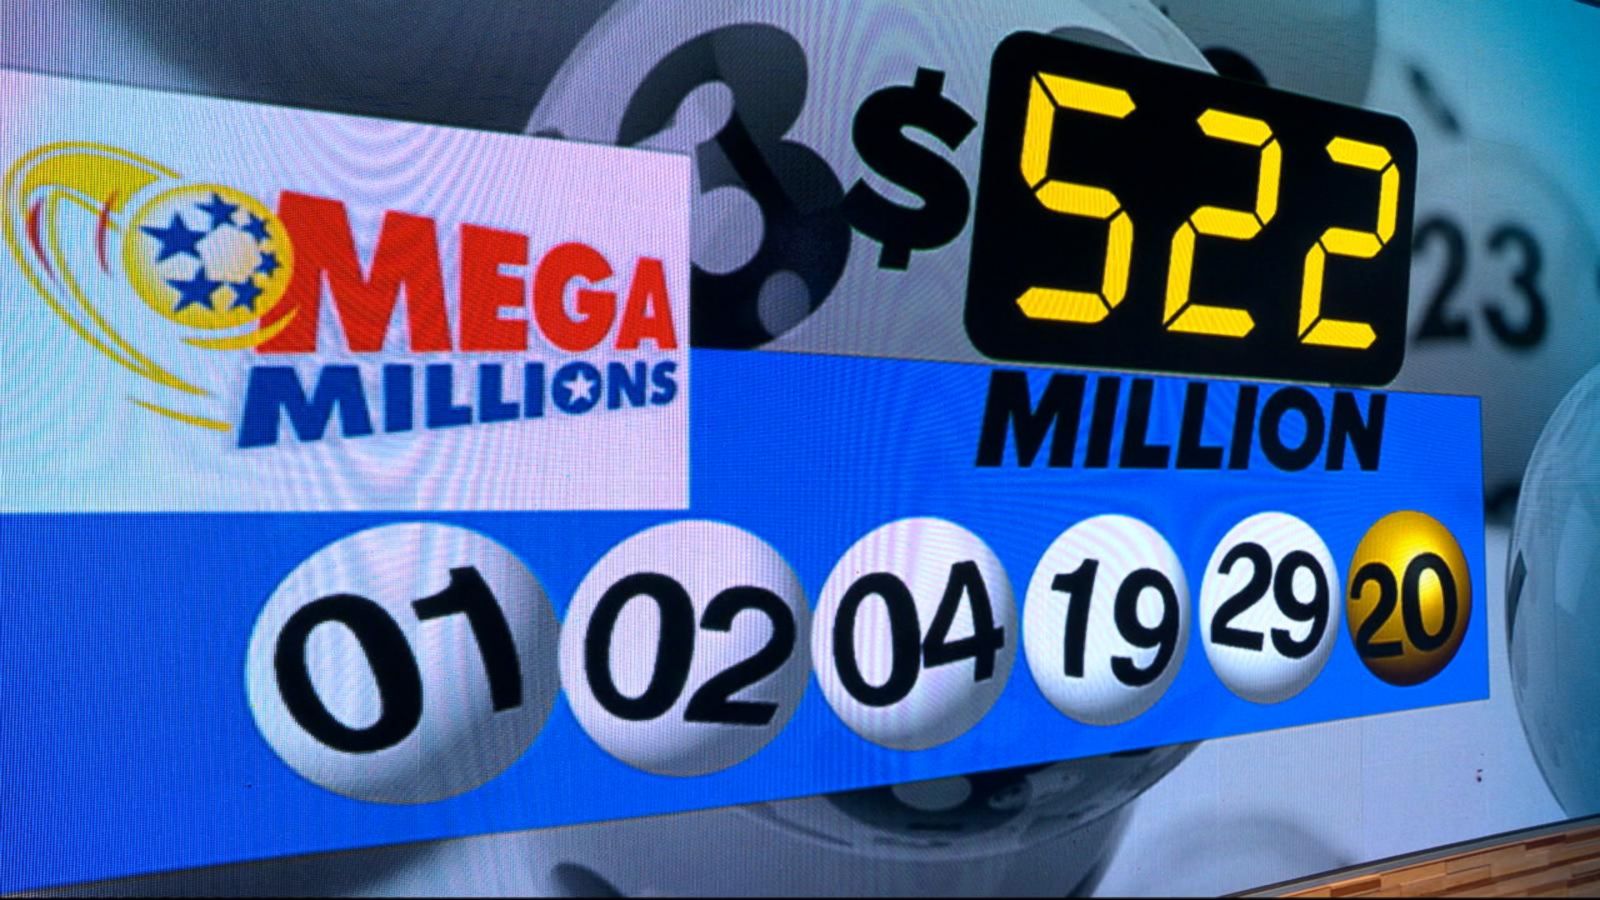 VIDEO: Winning Mega Millions jackpot sold in California